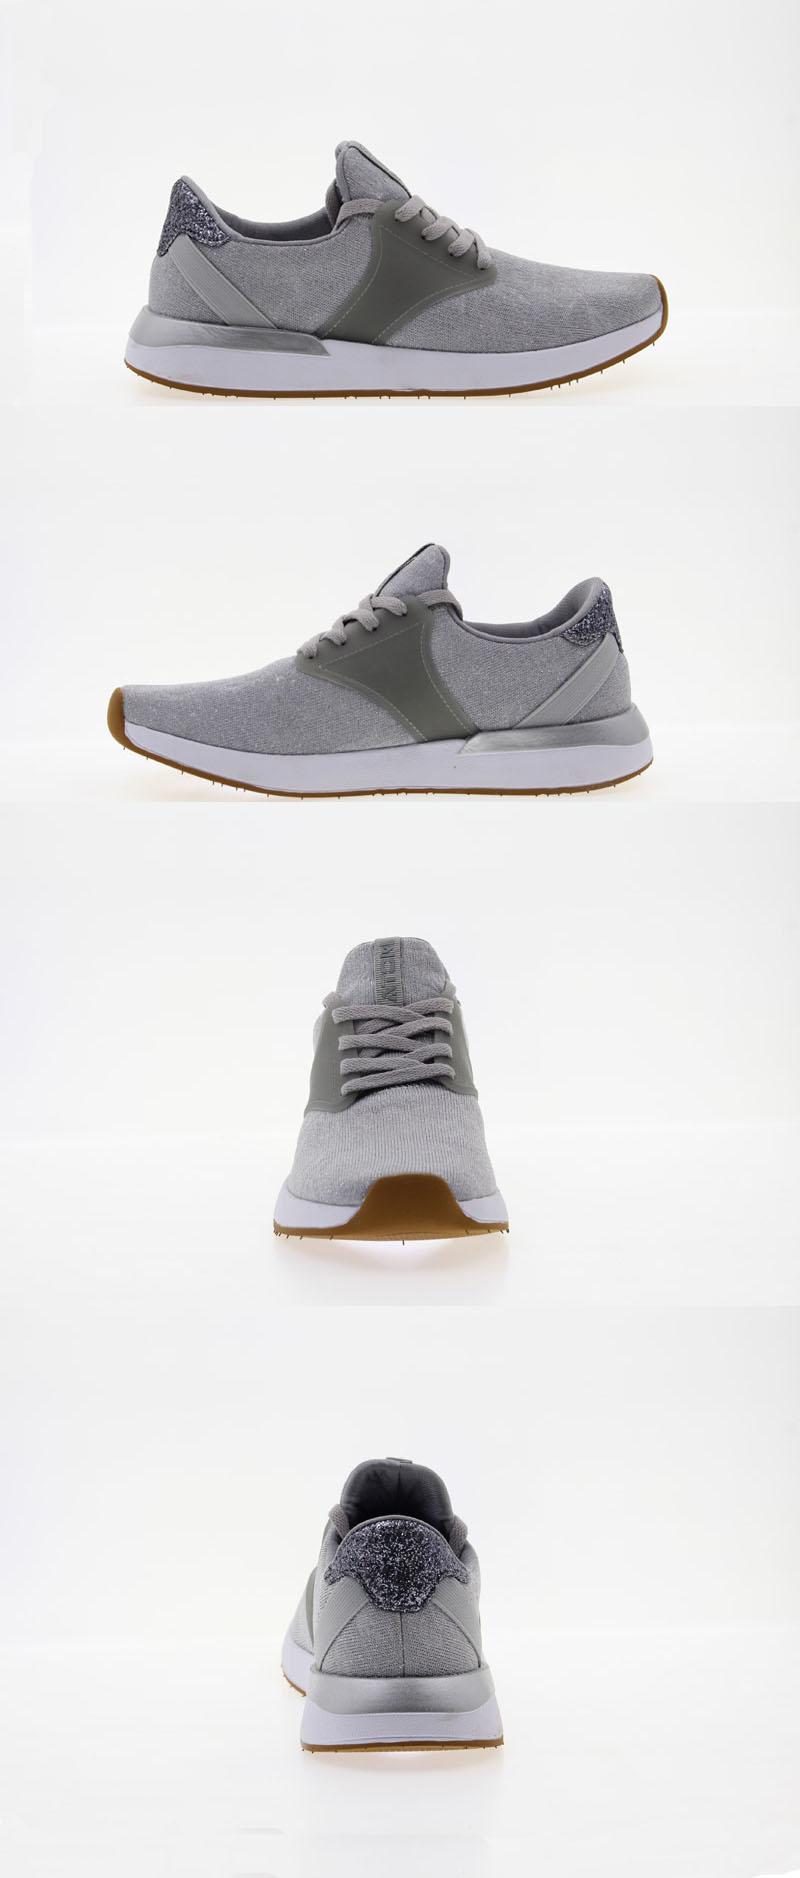 Grey fabric jogging shoes